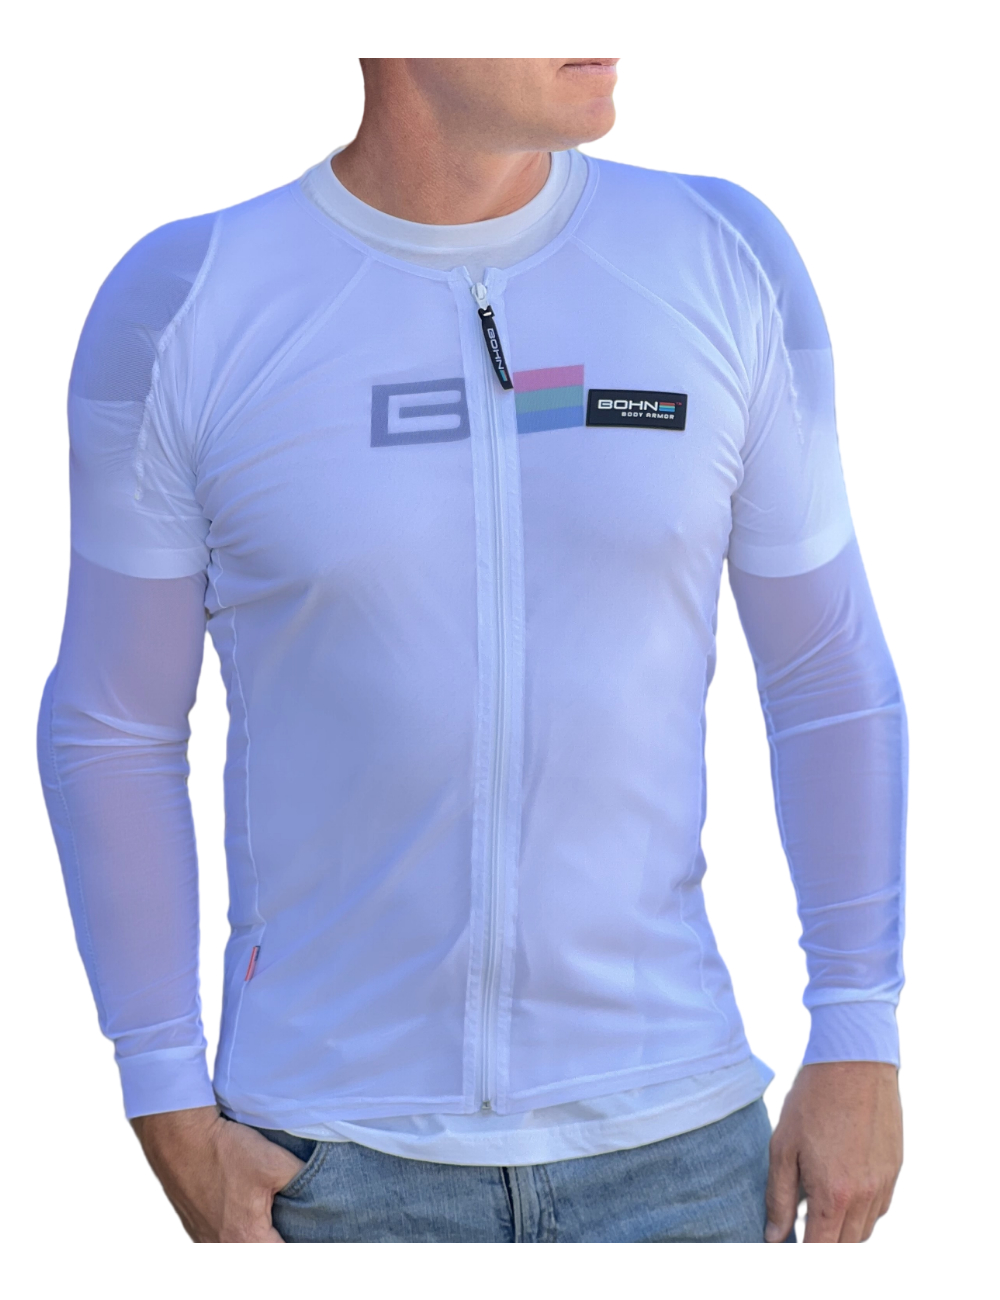 https://www.bohnarmor.com/wp-content/uploads/2022/08/White-Cool-Air-Mesh-Armored-Shirt.jpg